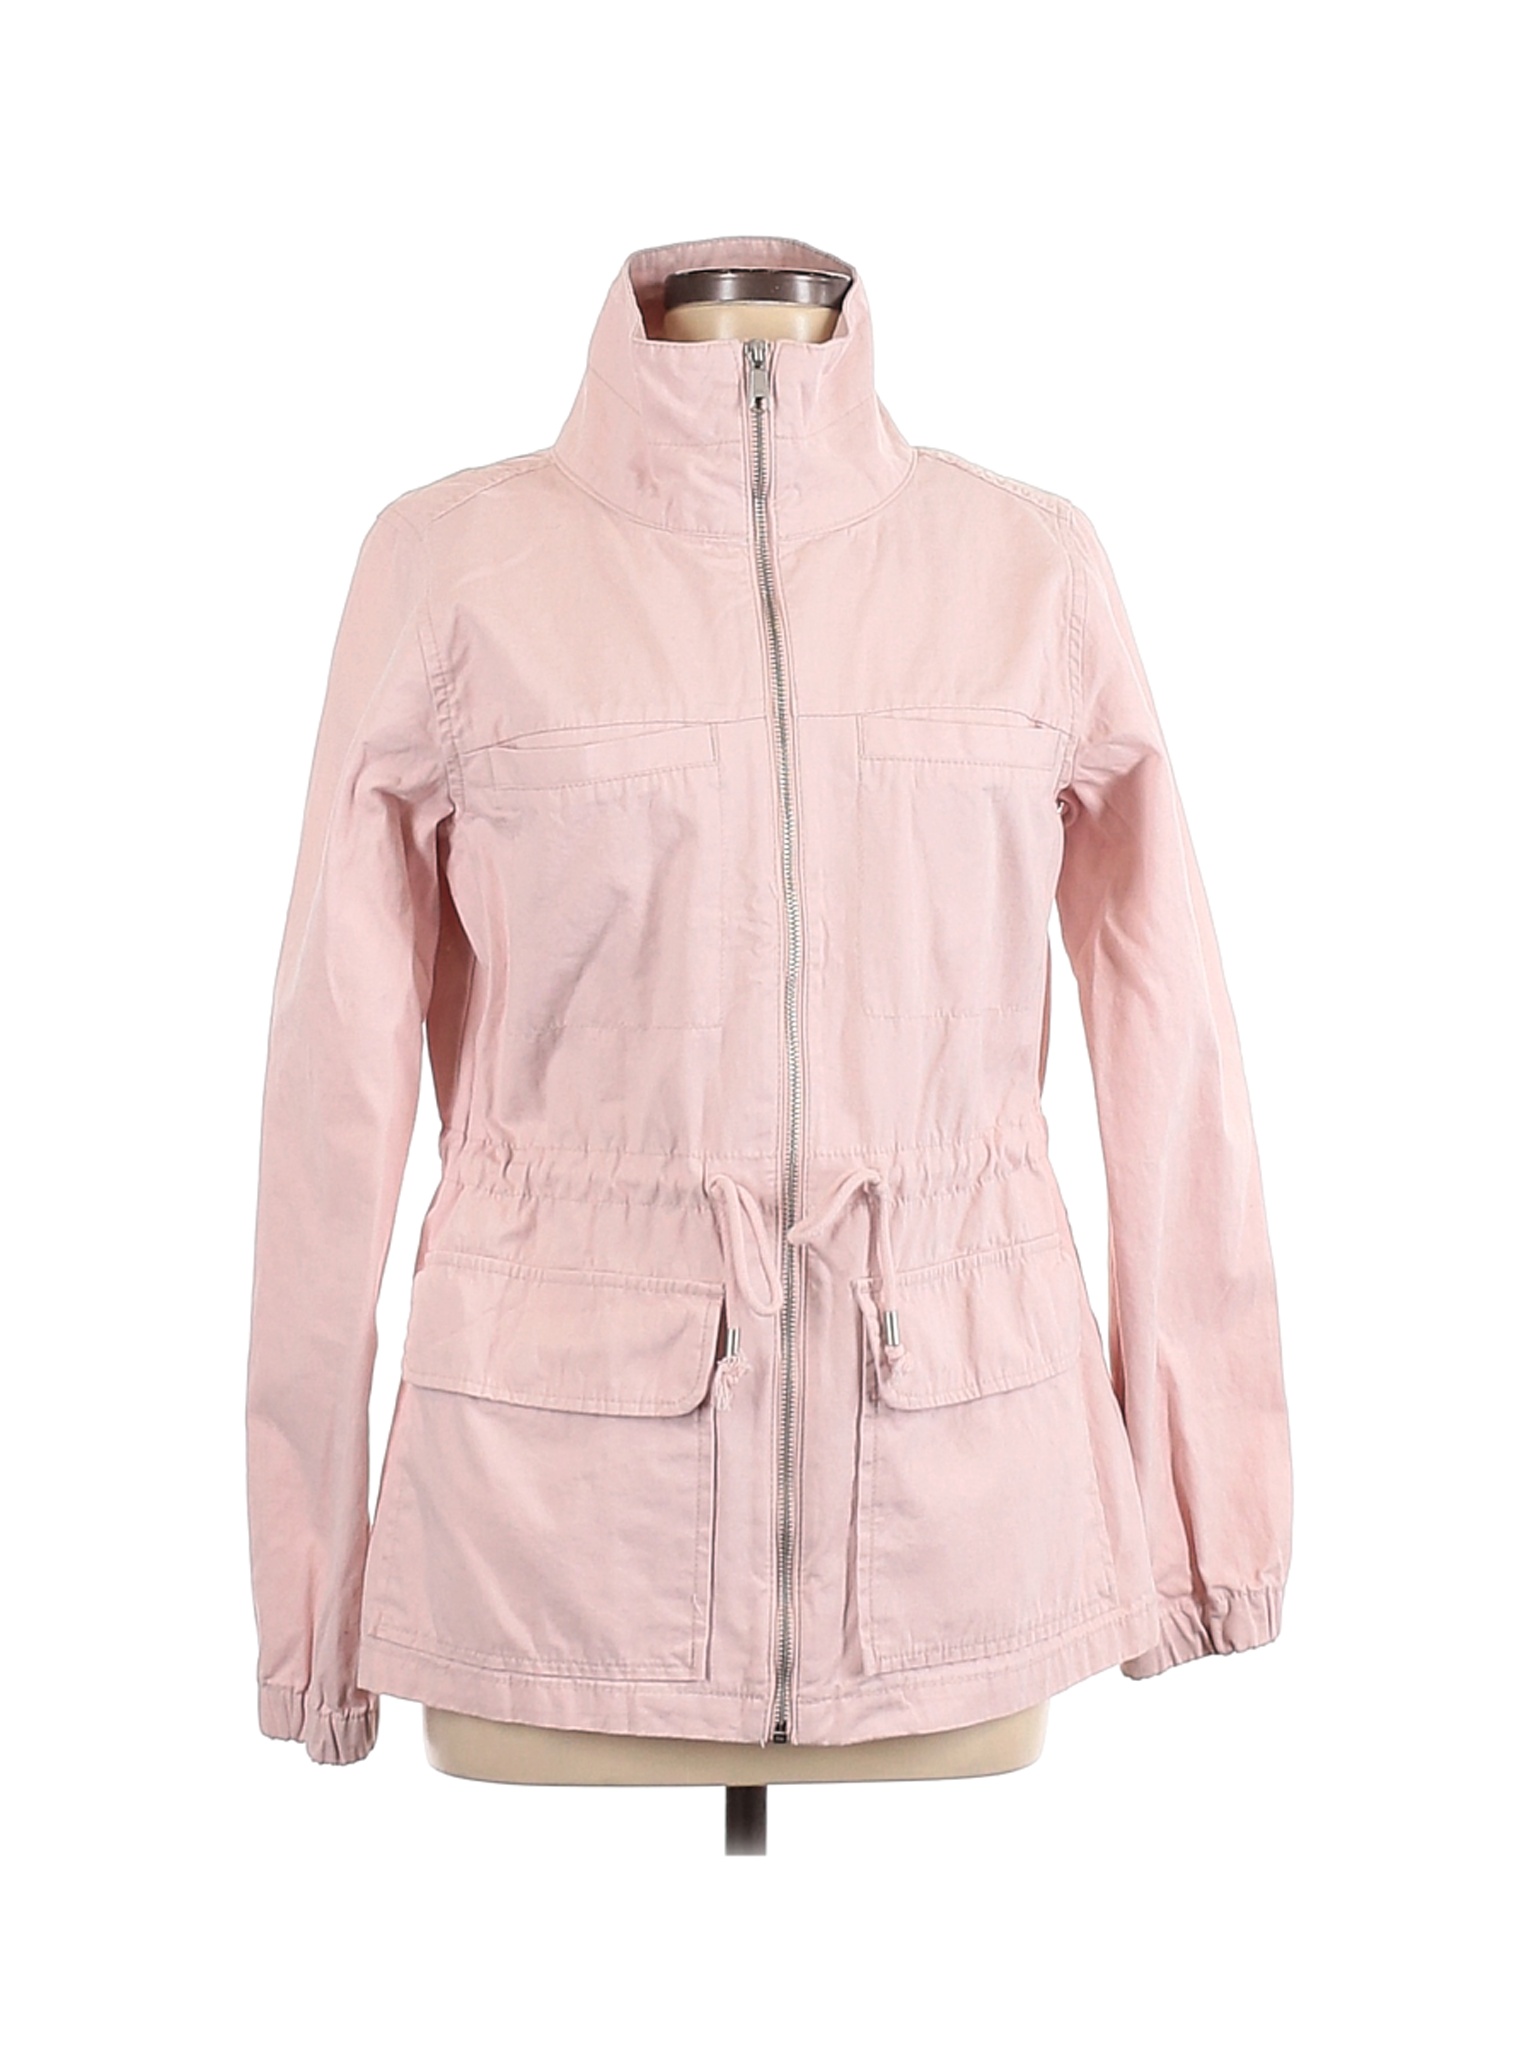 Old Navy Women Pink Jacket M | eBay